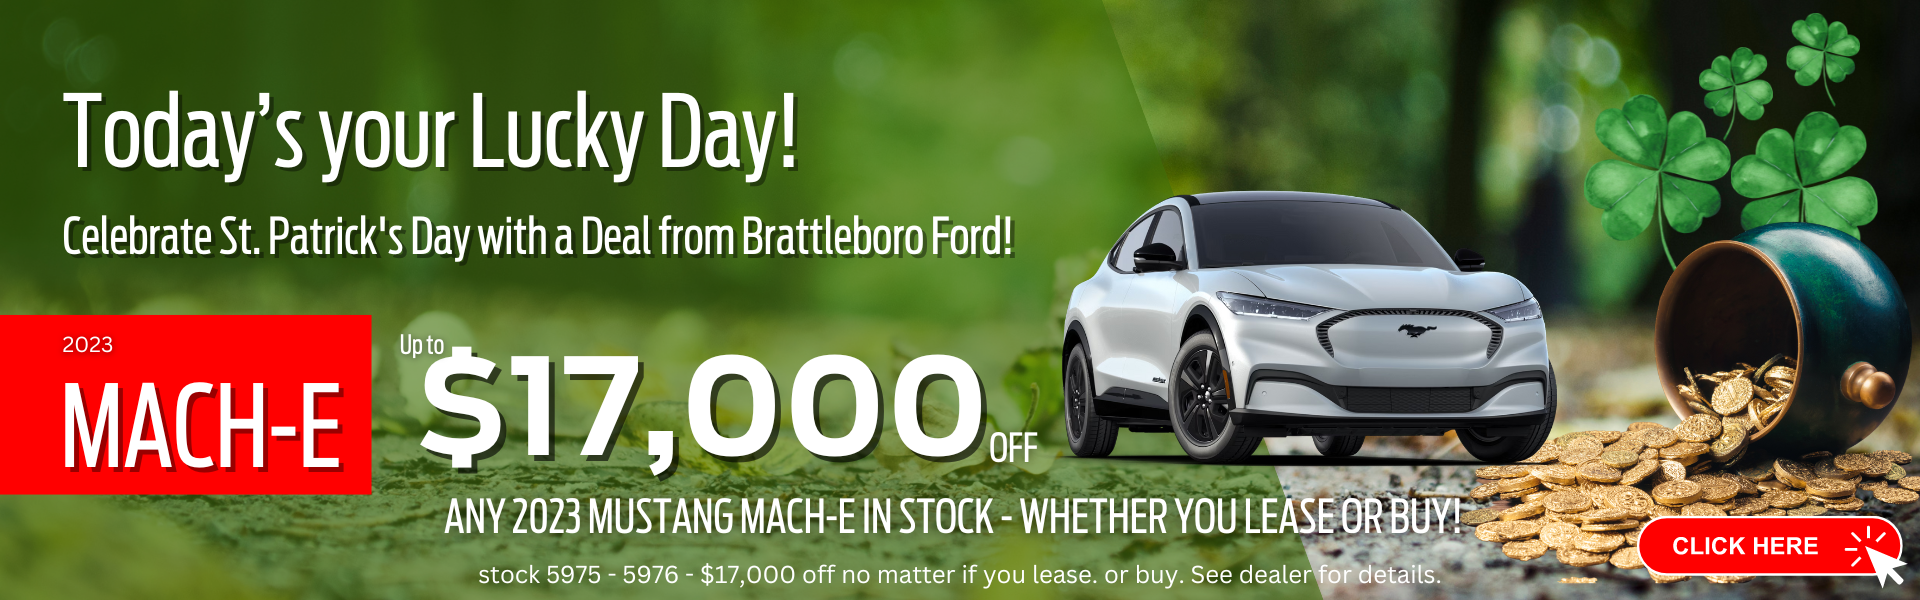 Lucky Day Event - Mach E $17K- Brattleboro Ford